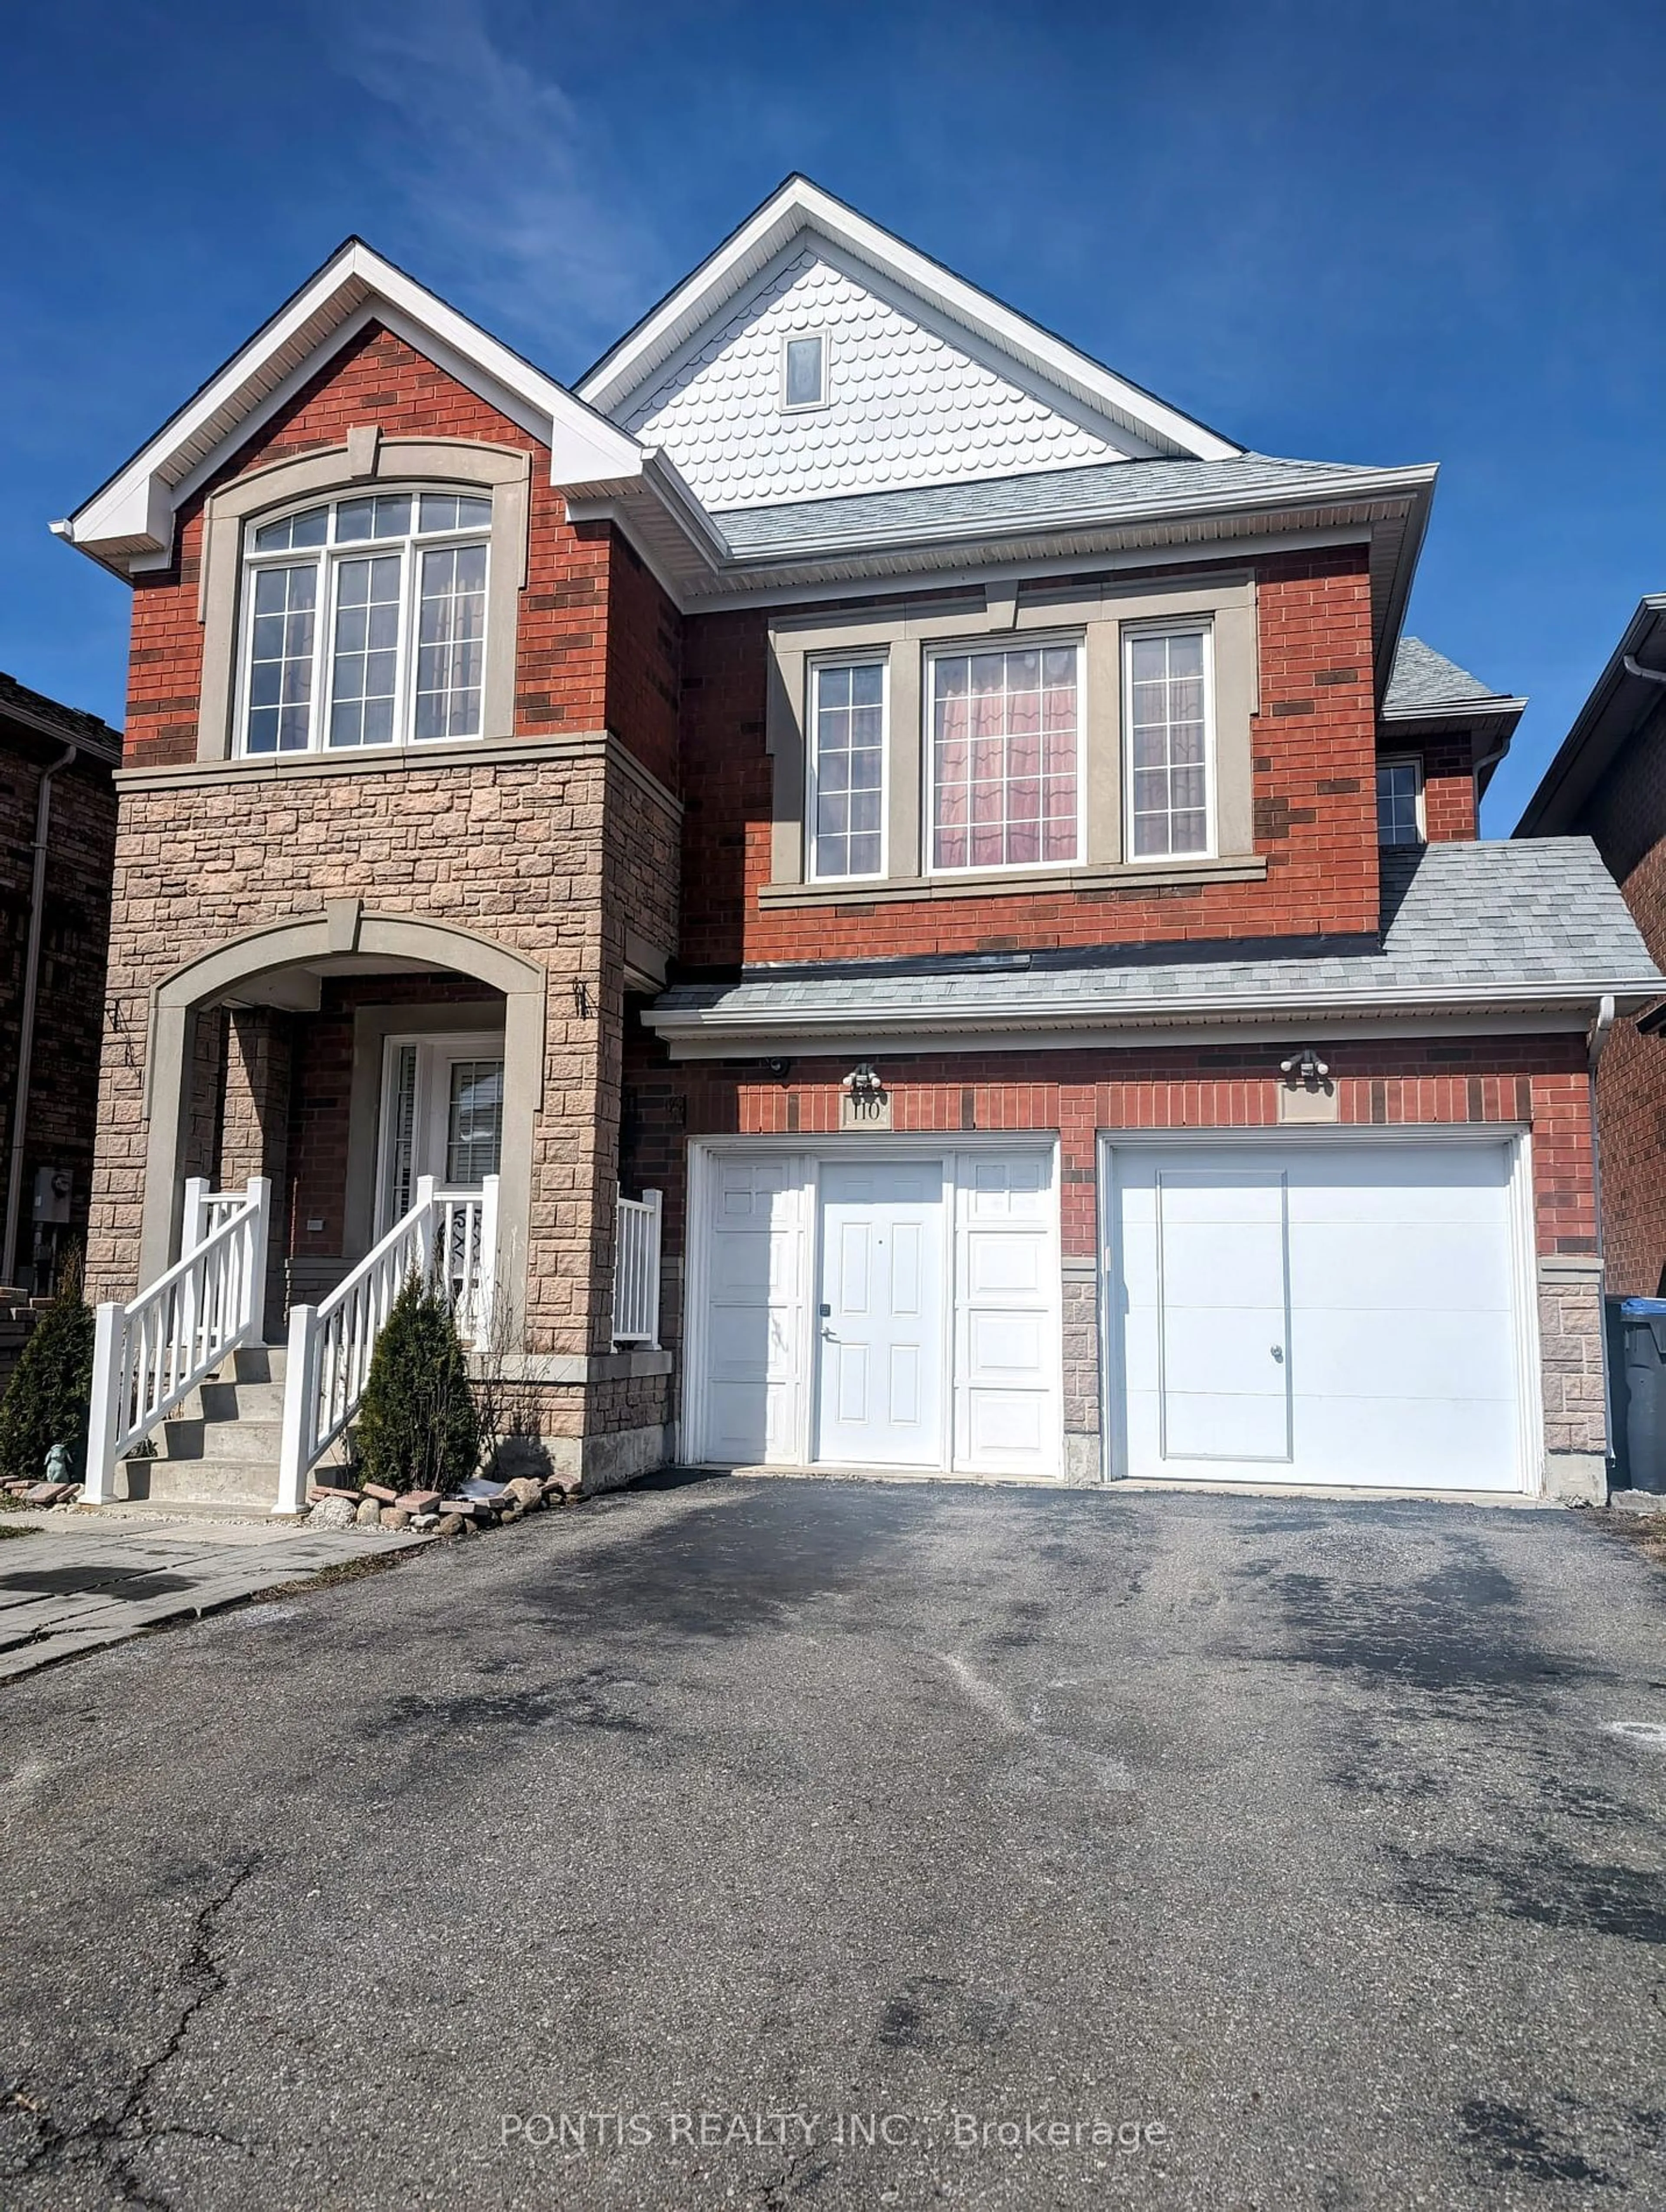 Home with brick exterior material for 110 Hollingsworth Circ, Brampton Ontario L7A 0J5